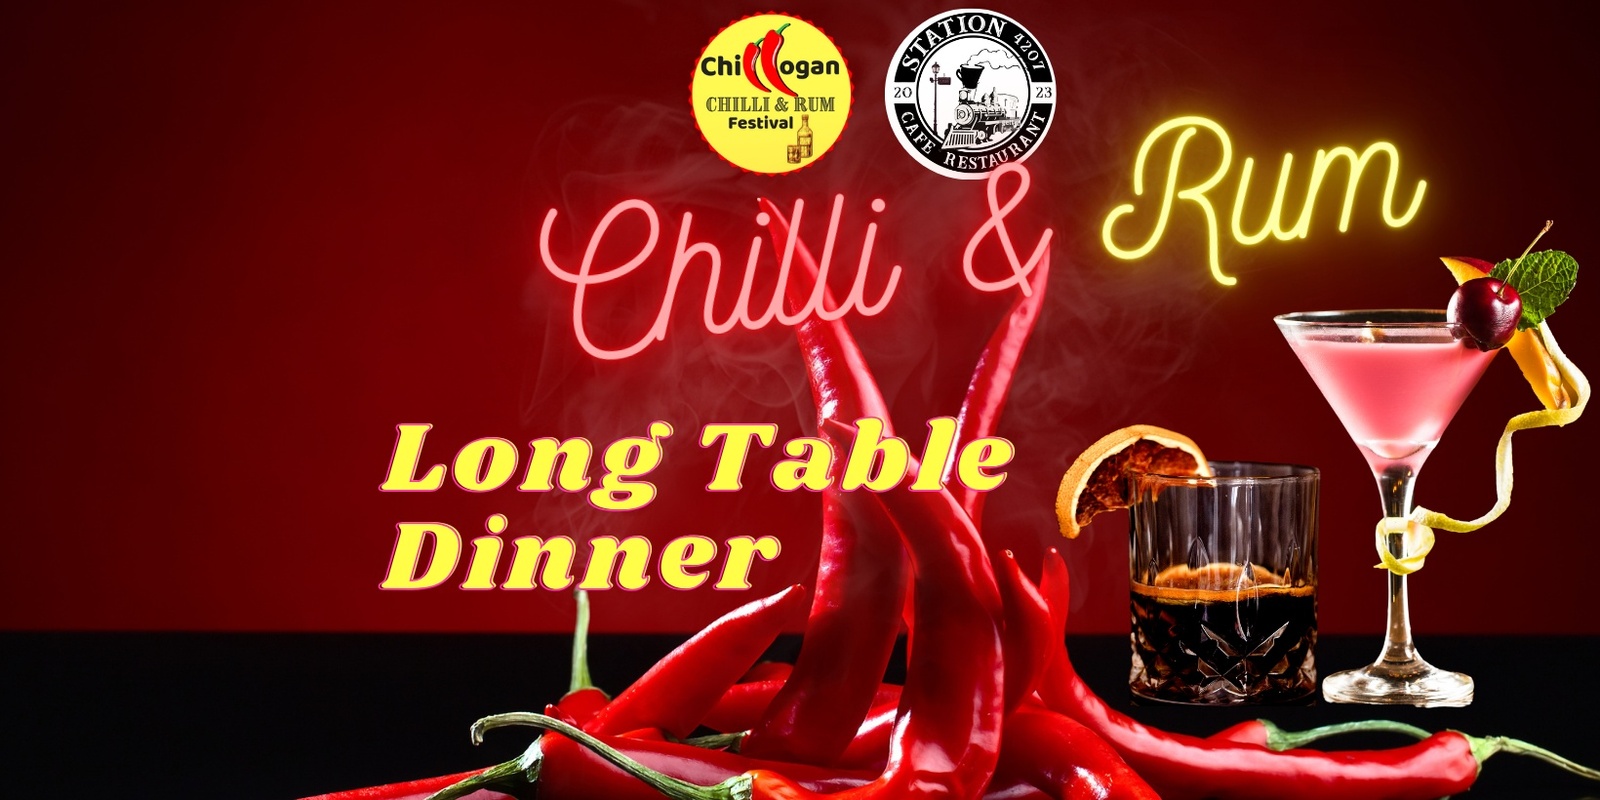 Banner image for Chilli & Rum Long Table Dinner at Station 4207